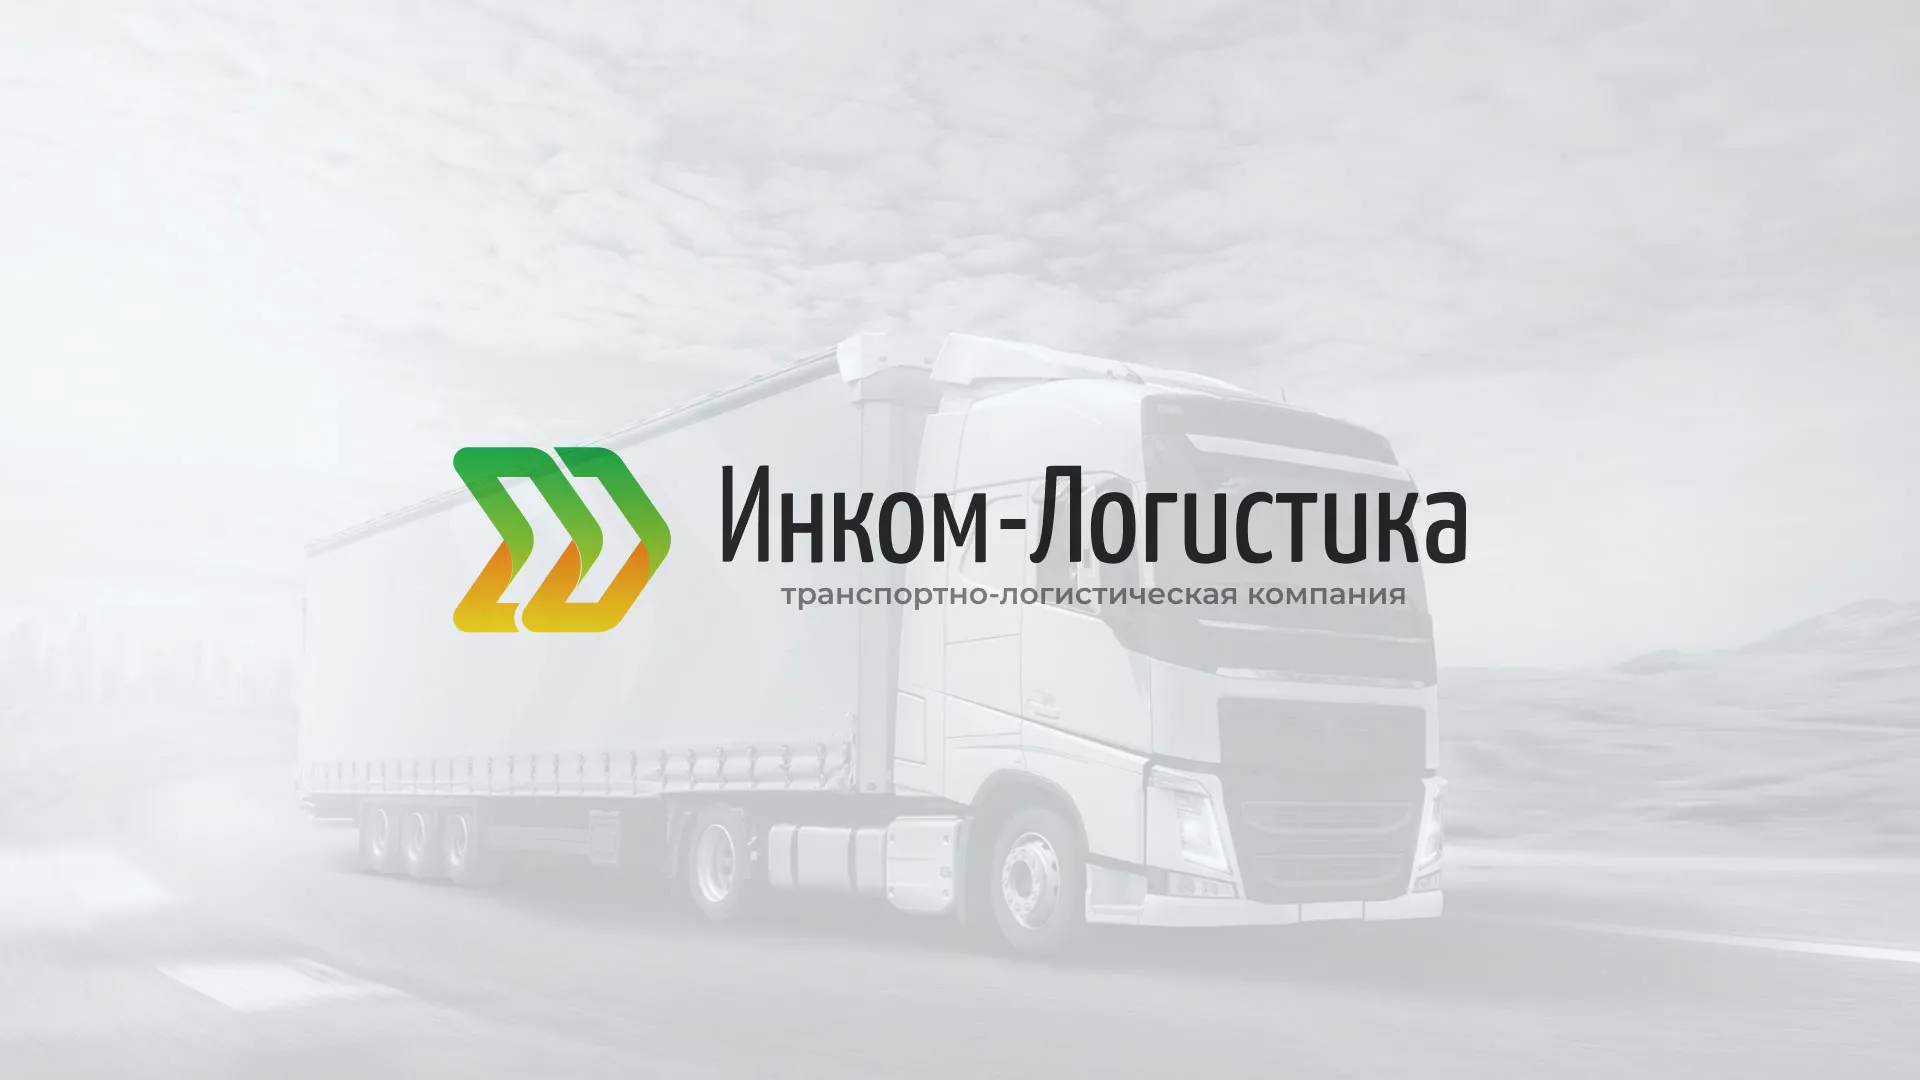 Разработка логотипа и сайта компании «Инком-Логистика» в Зверево